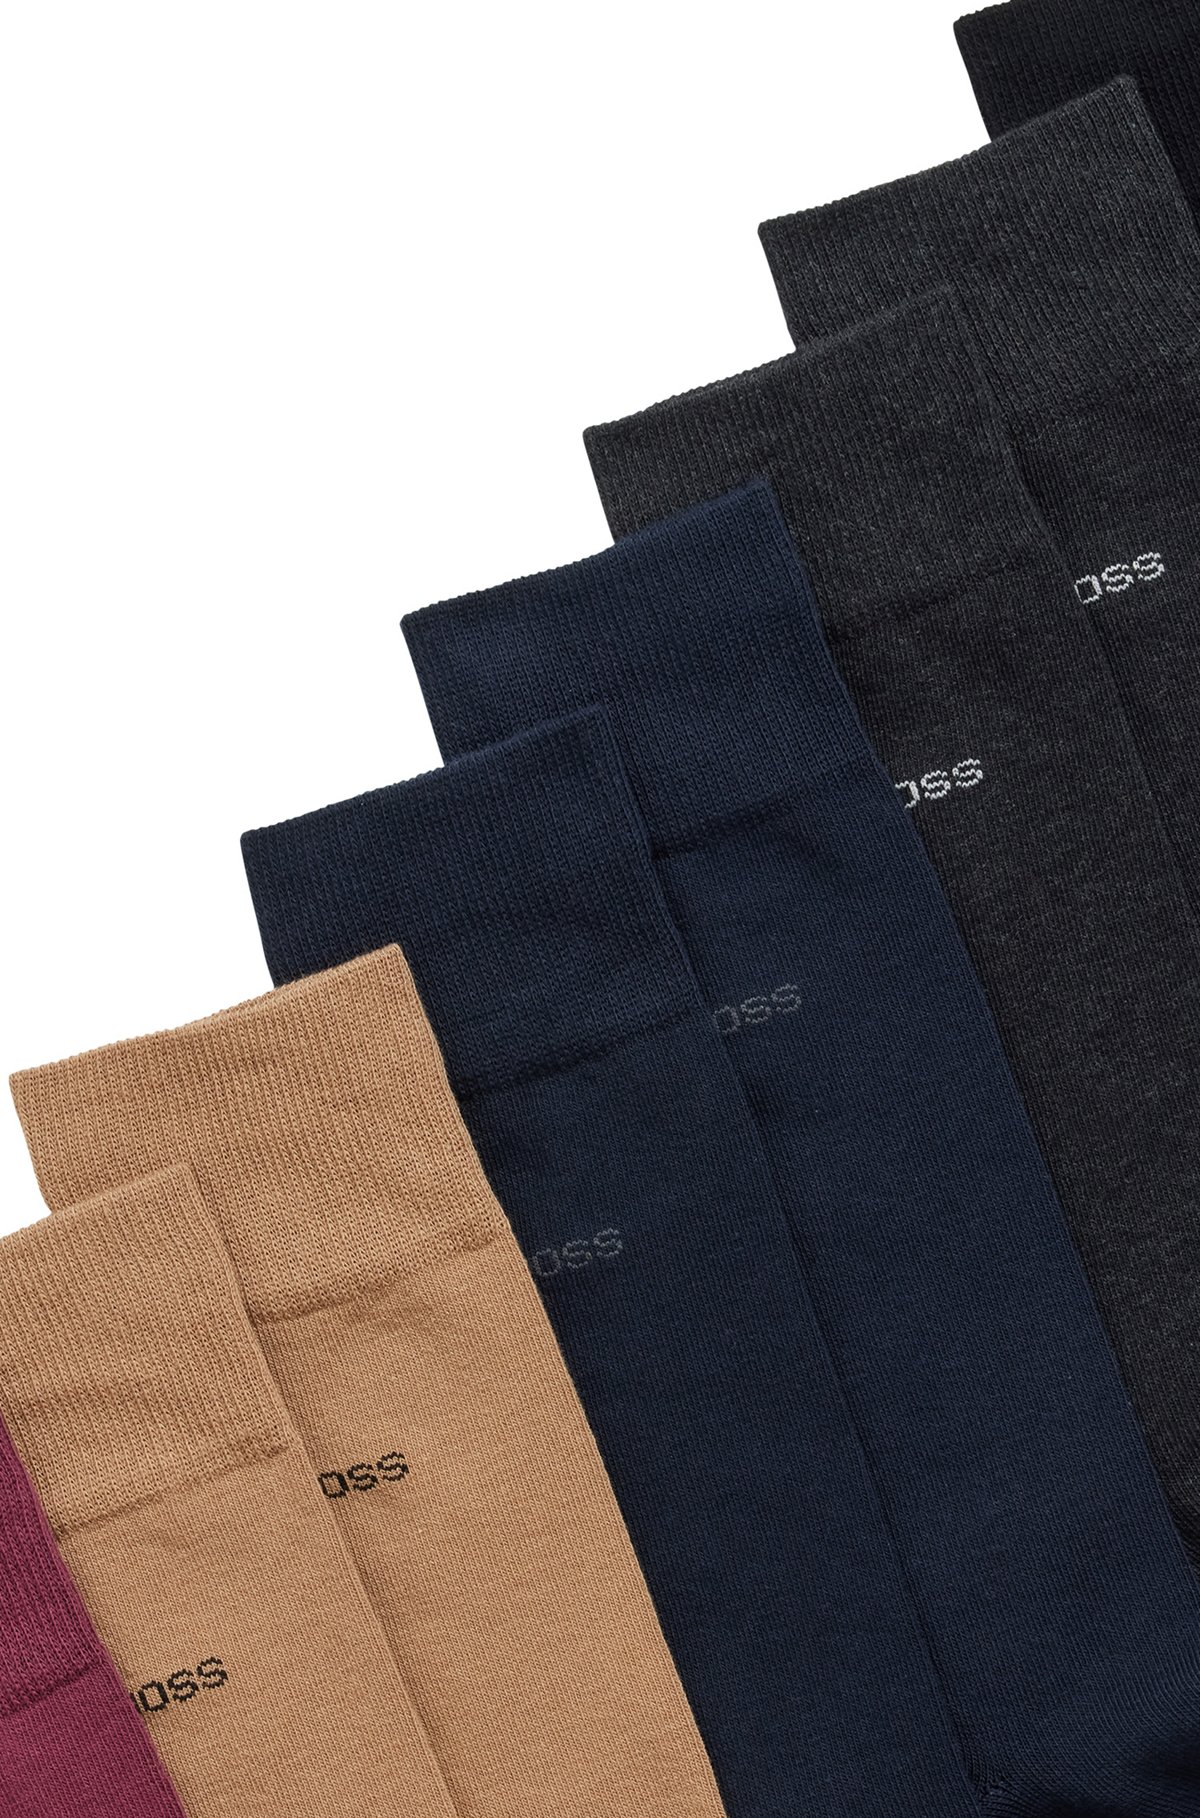 BOSS - Five-pack of regular-length socks in a cotton blend